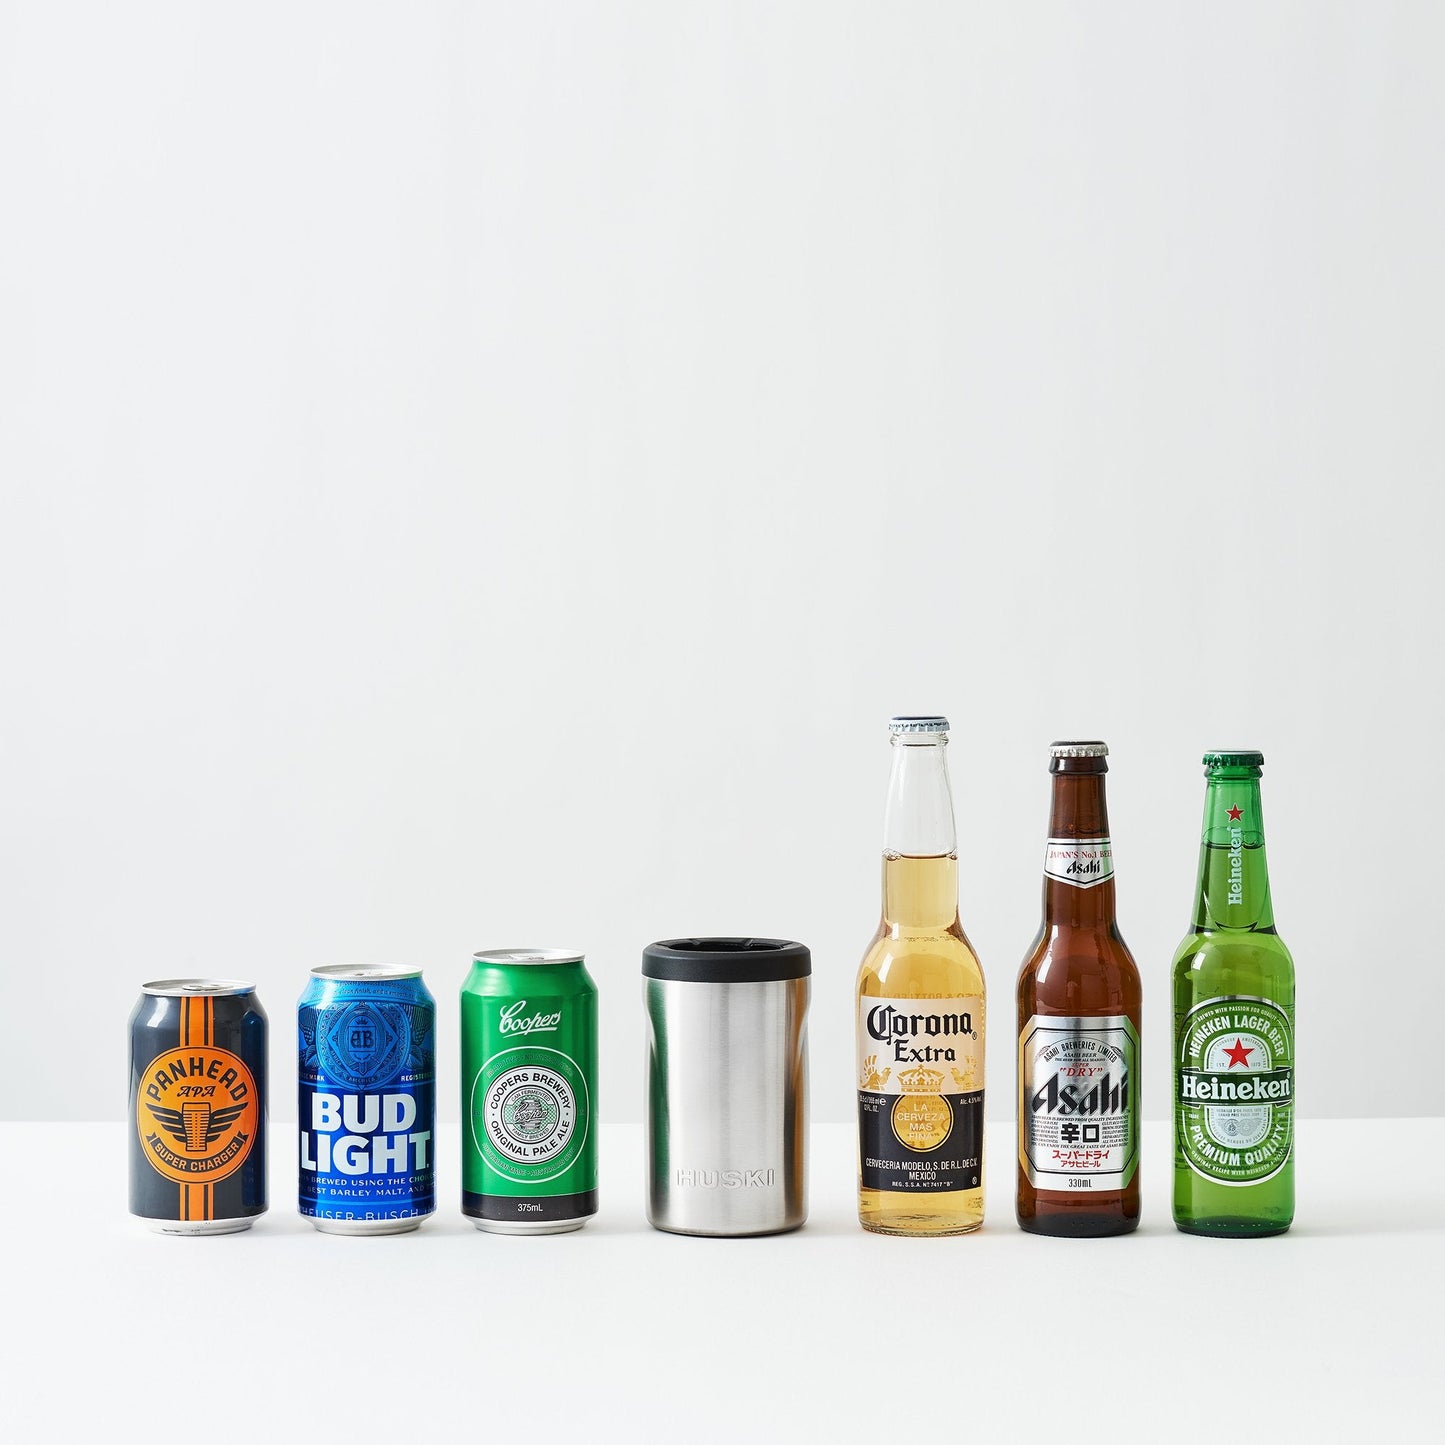 Huski Beer Cooler 2.0 - Brushed Stainless